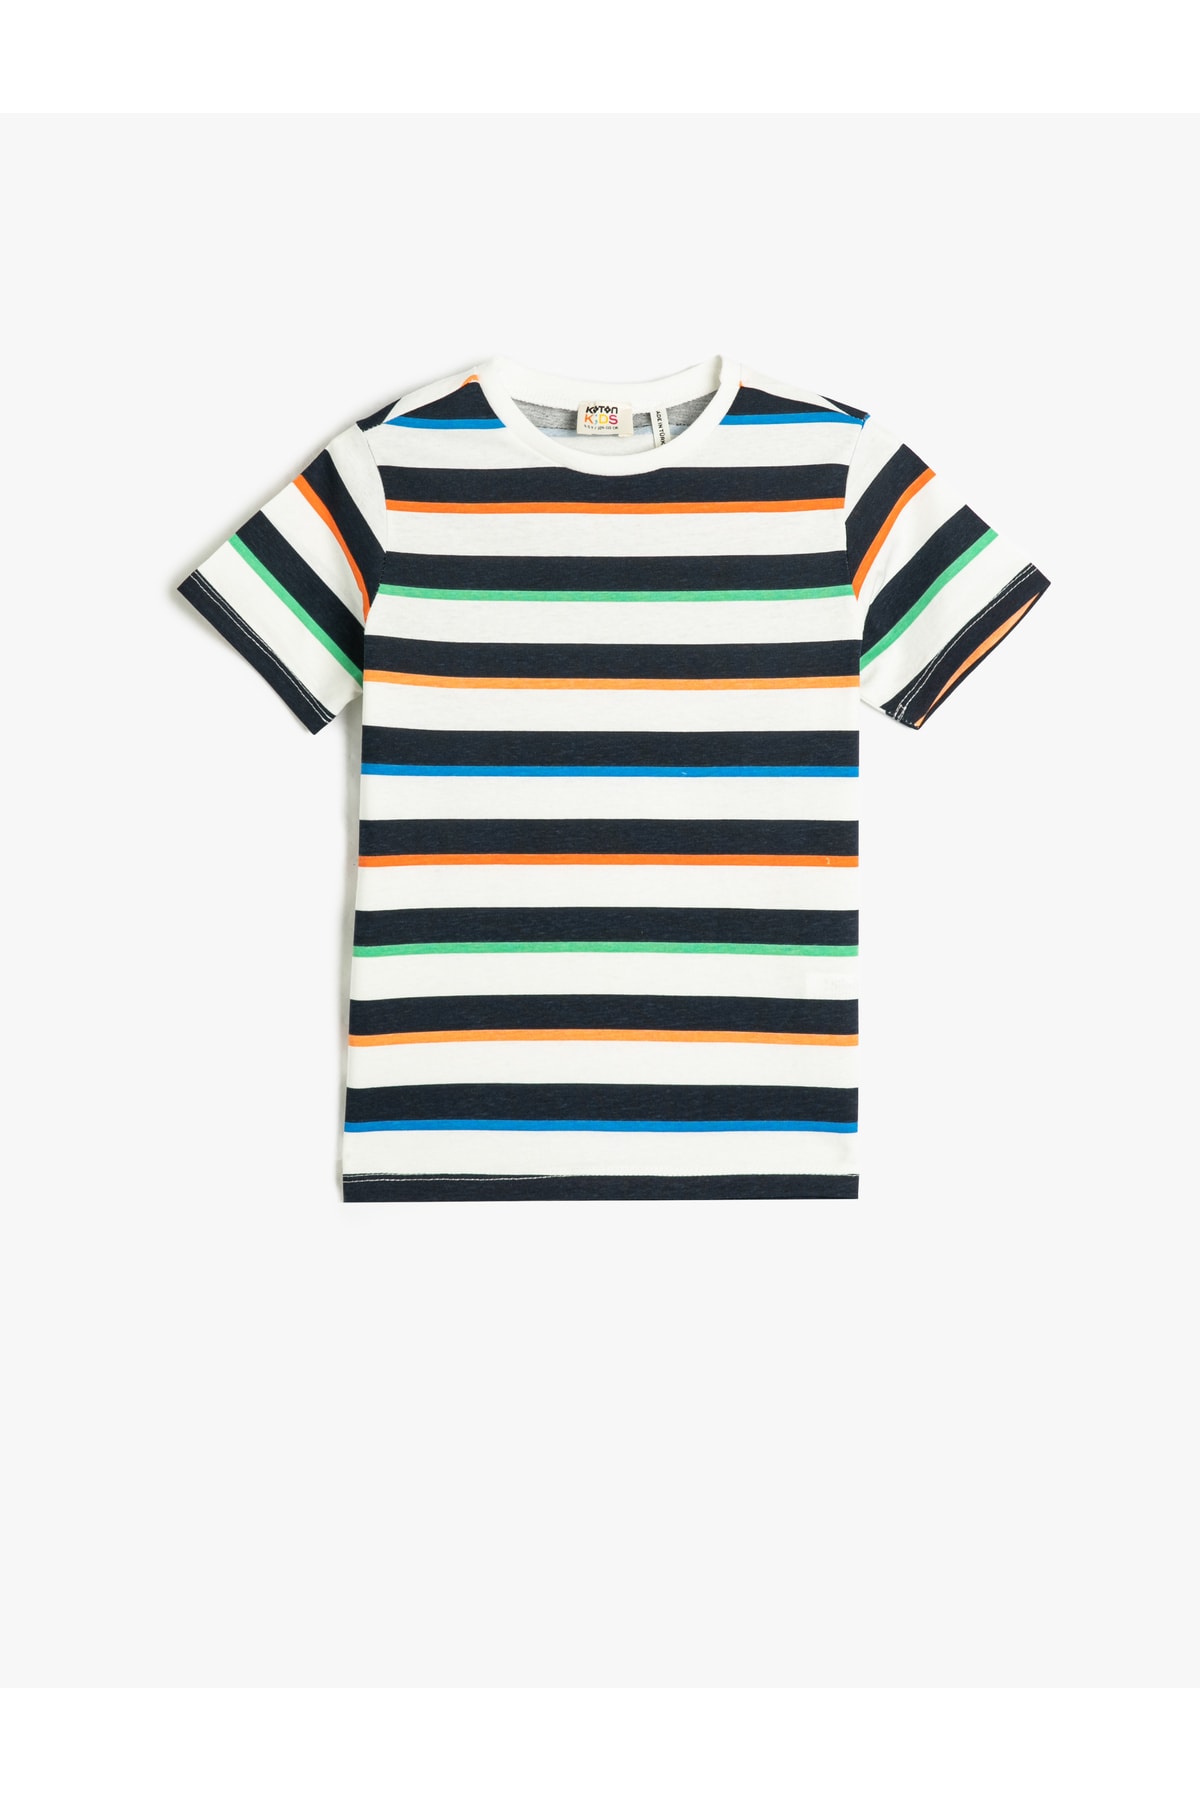 Koton Striped T-Shirt Short Sleeve Crew Neck Cotton